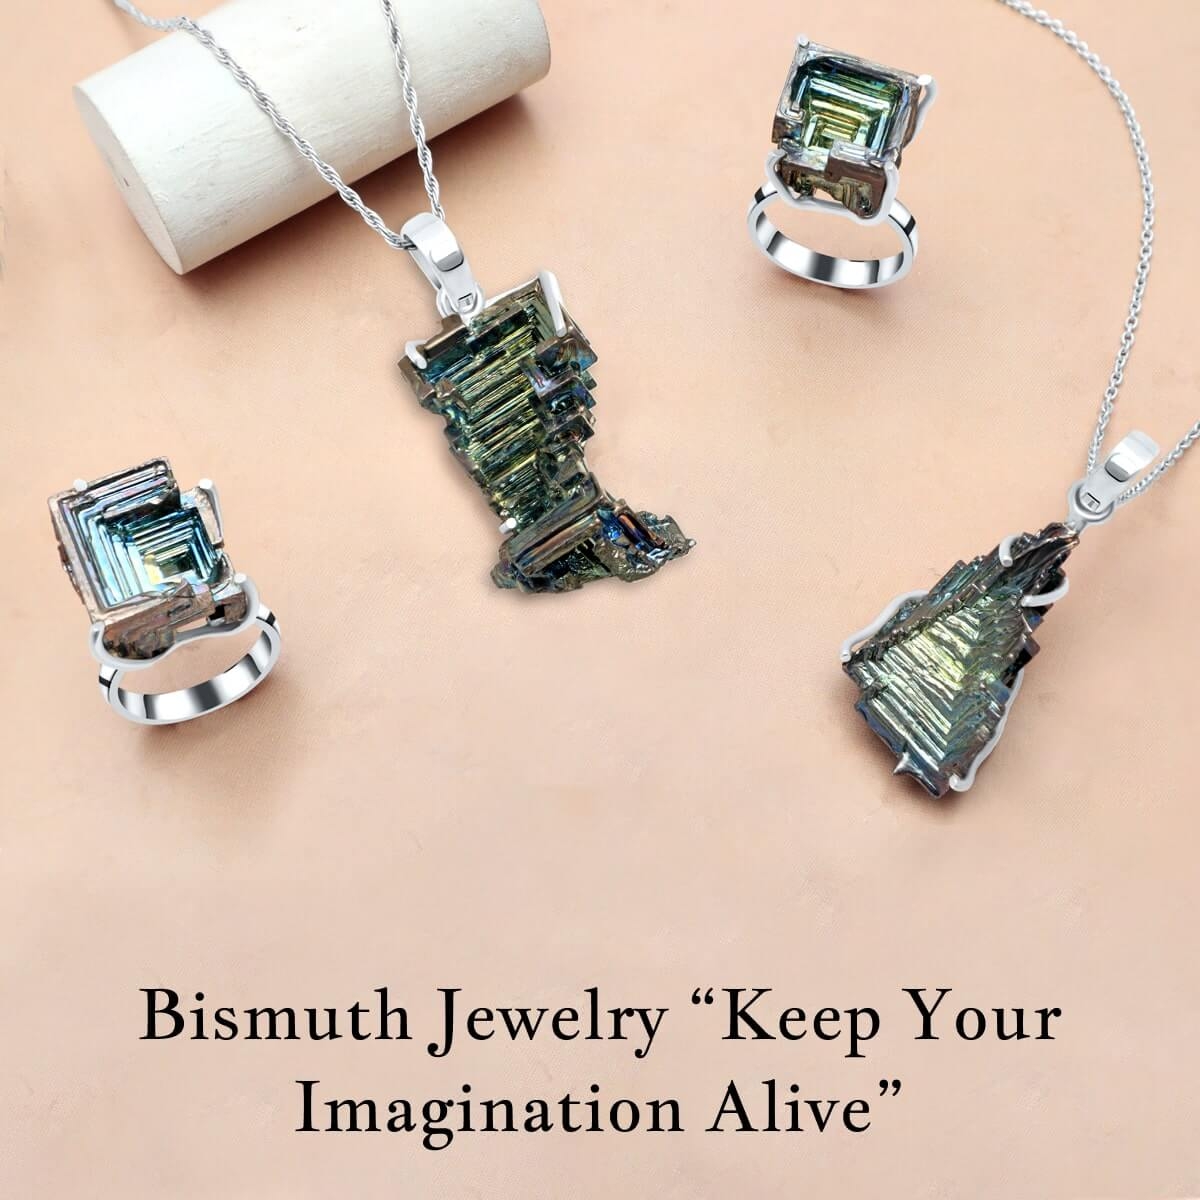 Benefits Of Bismuth Jewelry